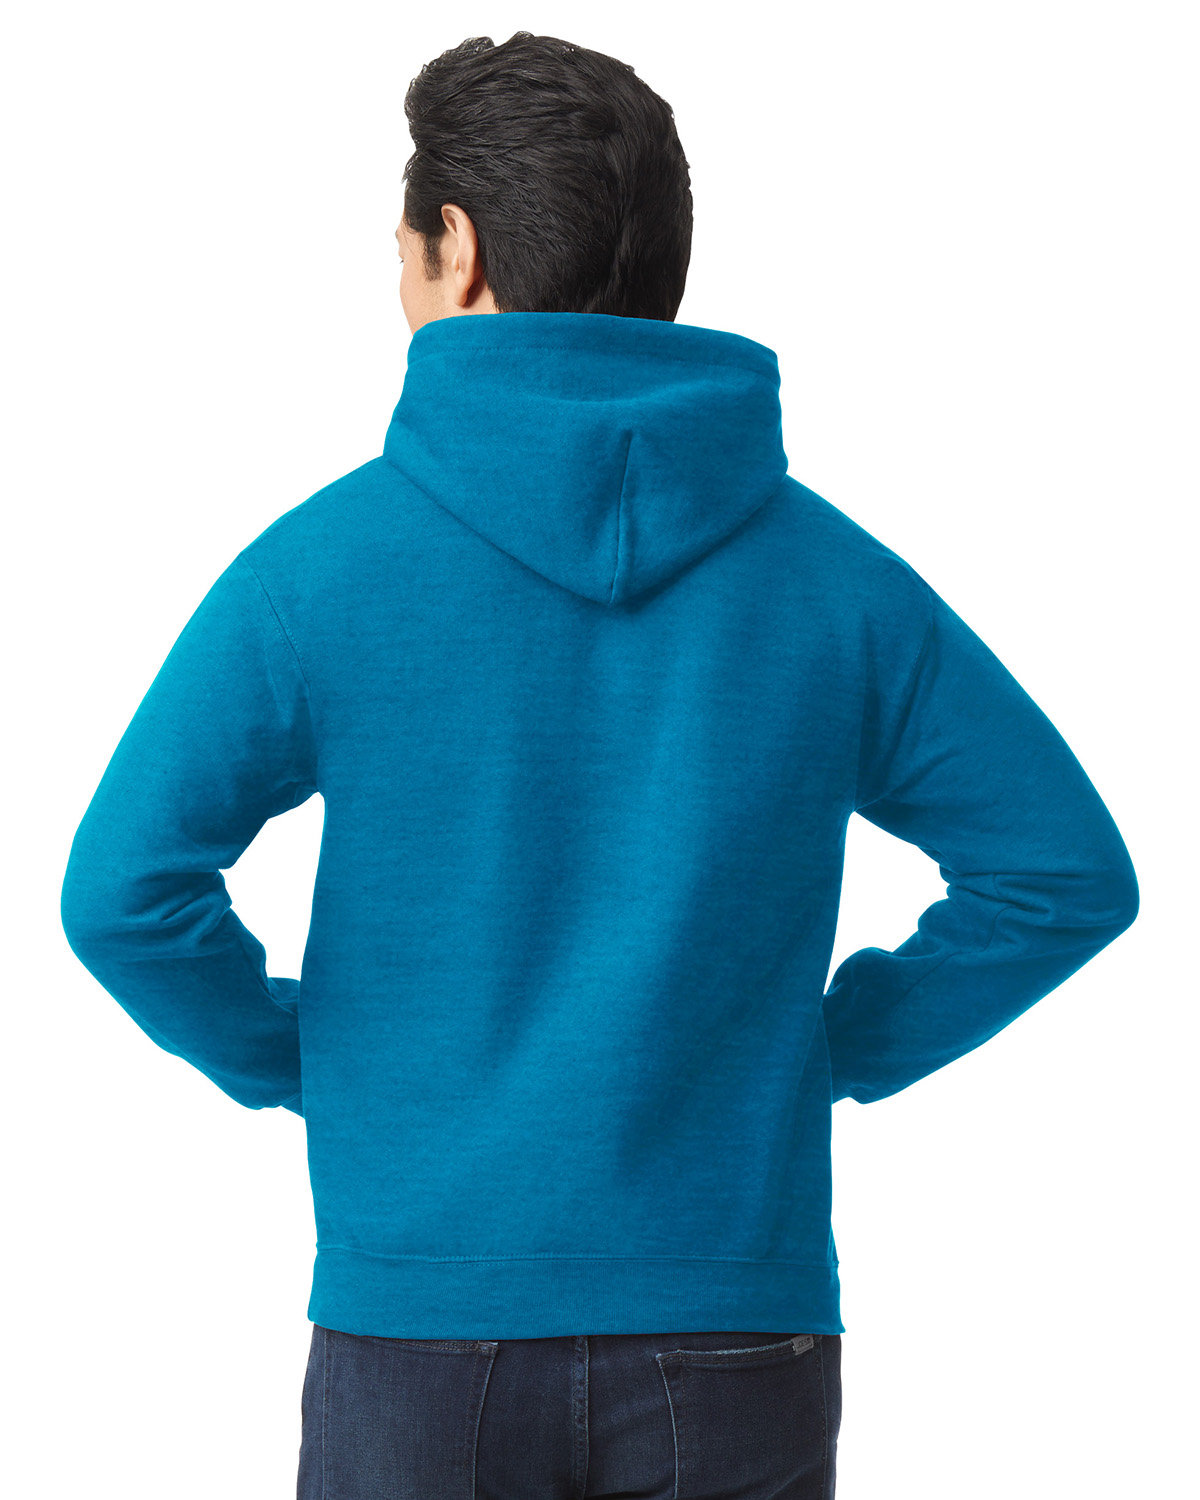 Gildan Gildan Heavy Blend Hooded Sweatshirt - Just Volleyball Ltd